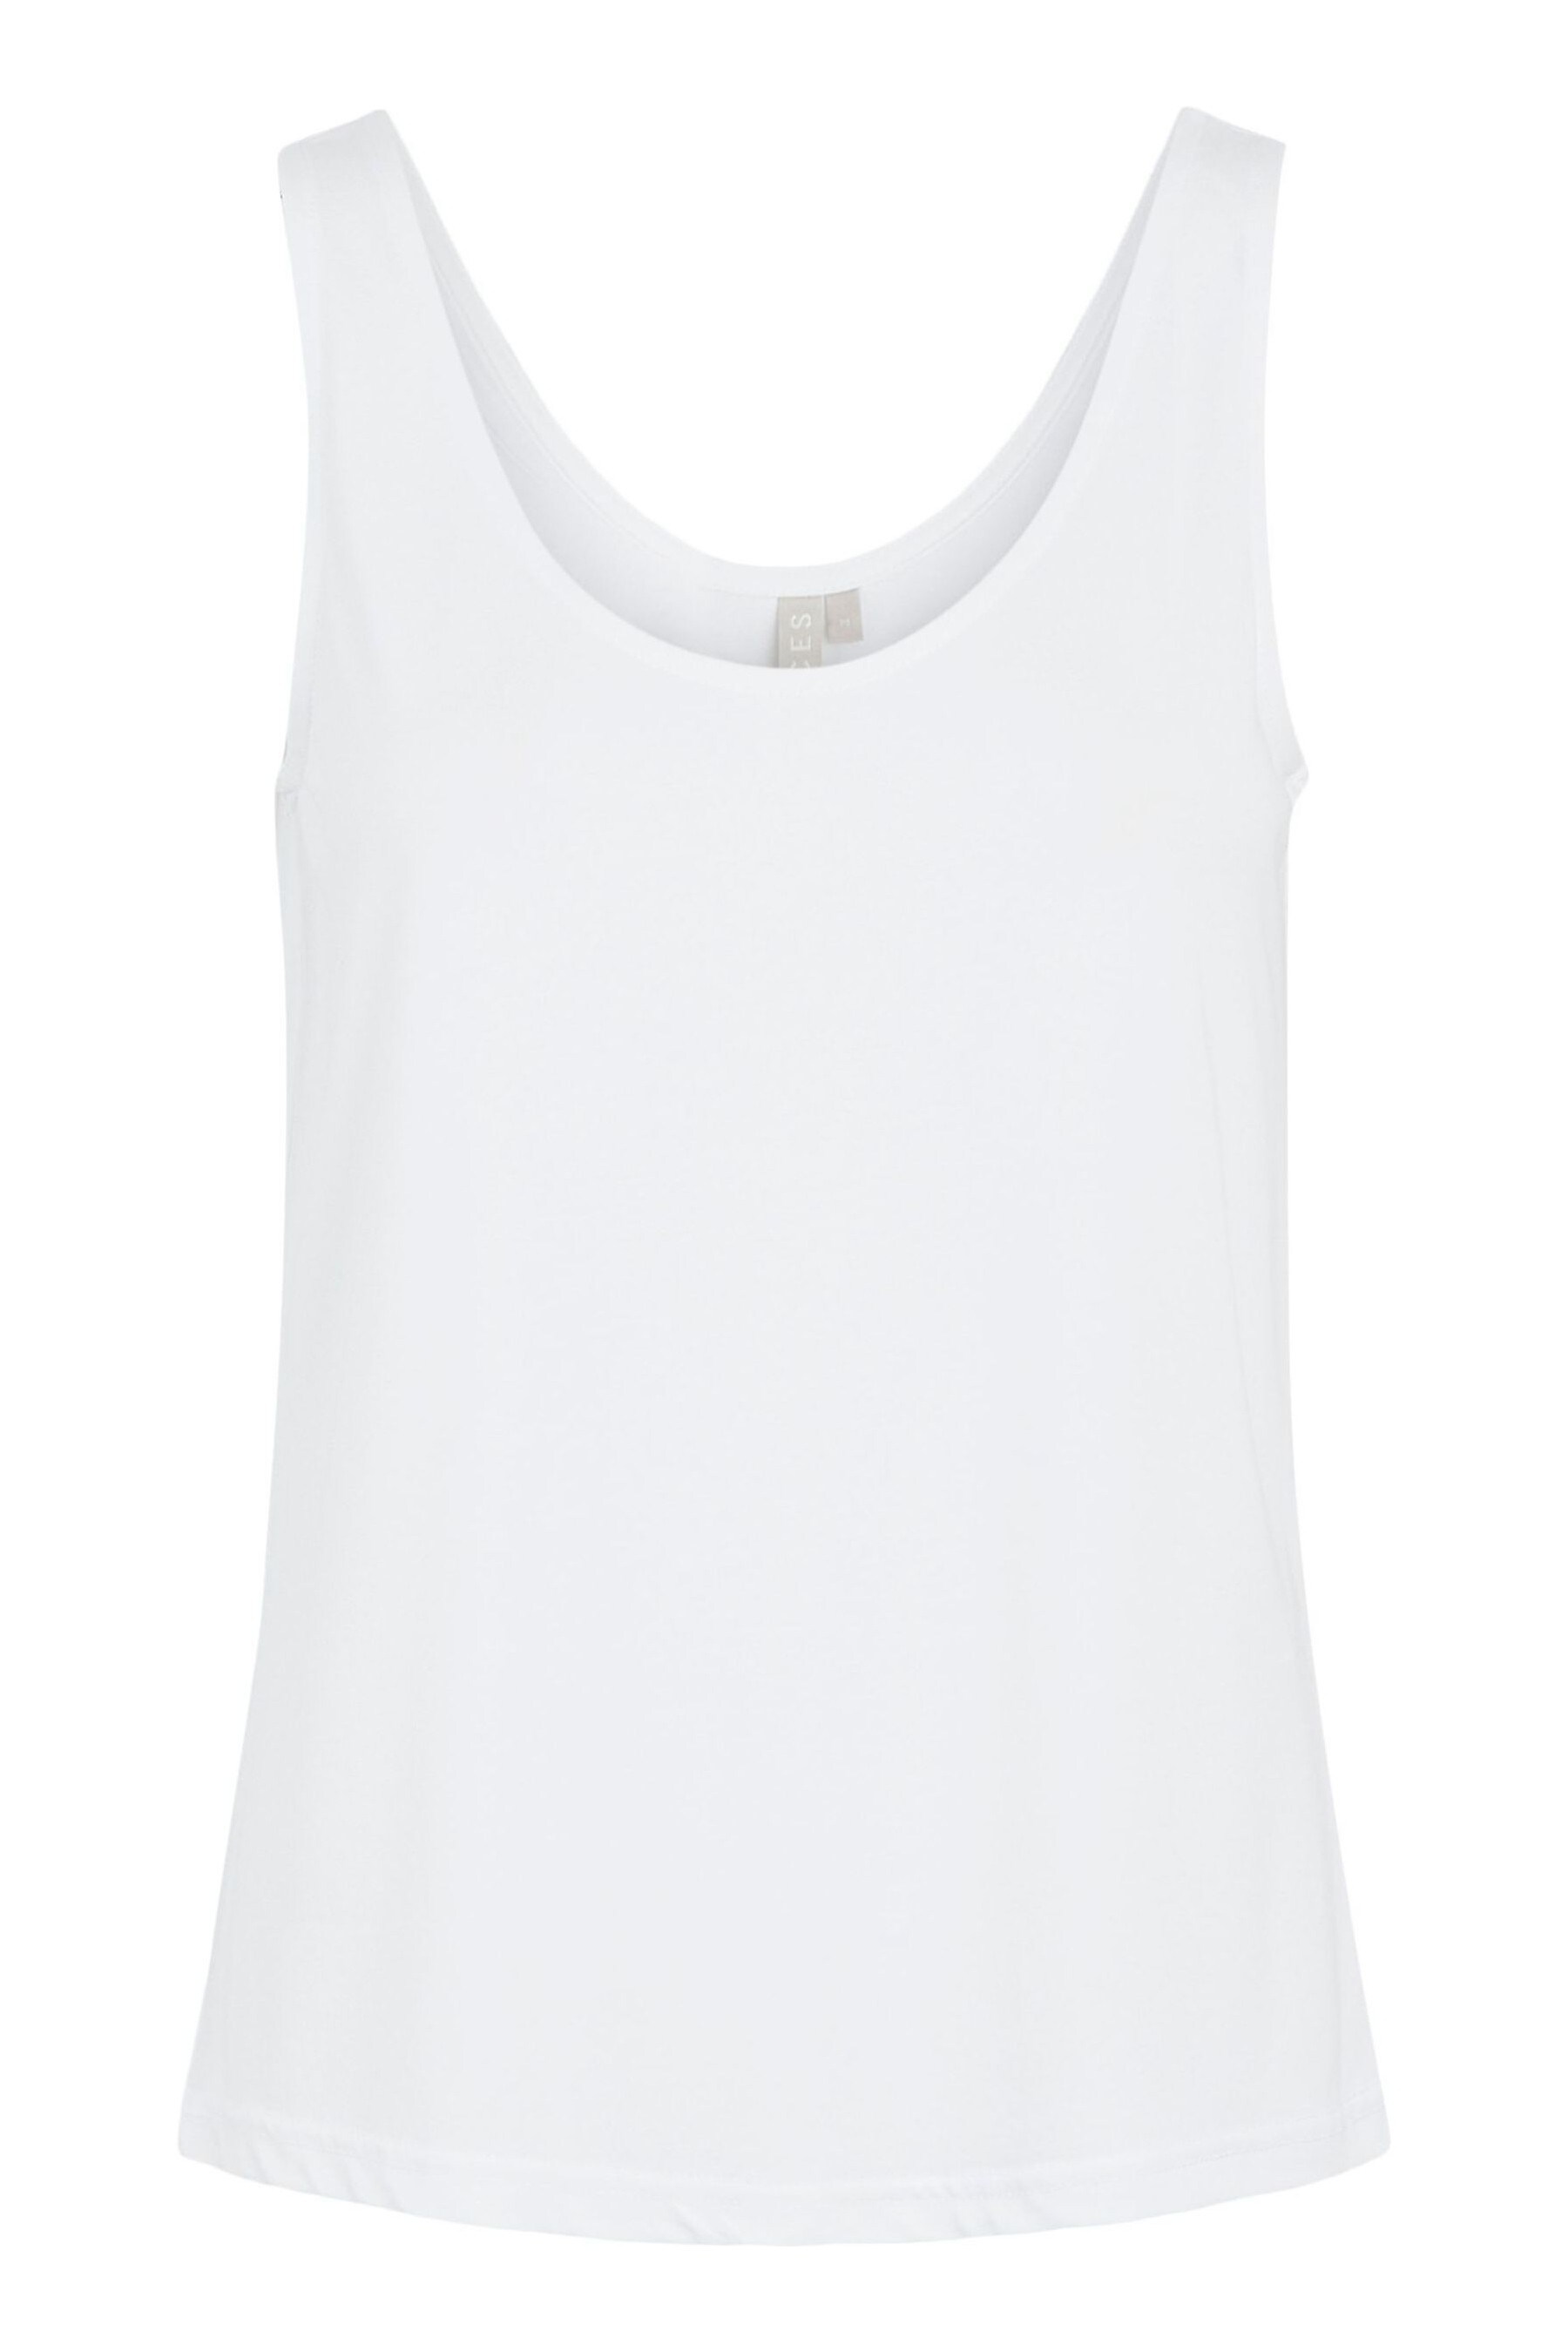 Buy Pieces Tencel® Round Neck Vest from the Next UK online shop